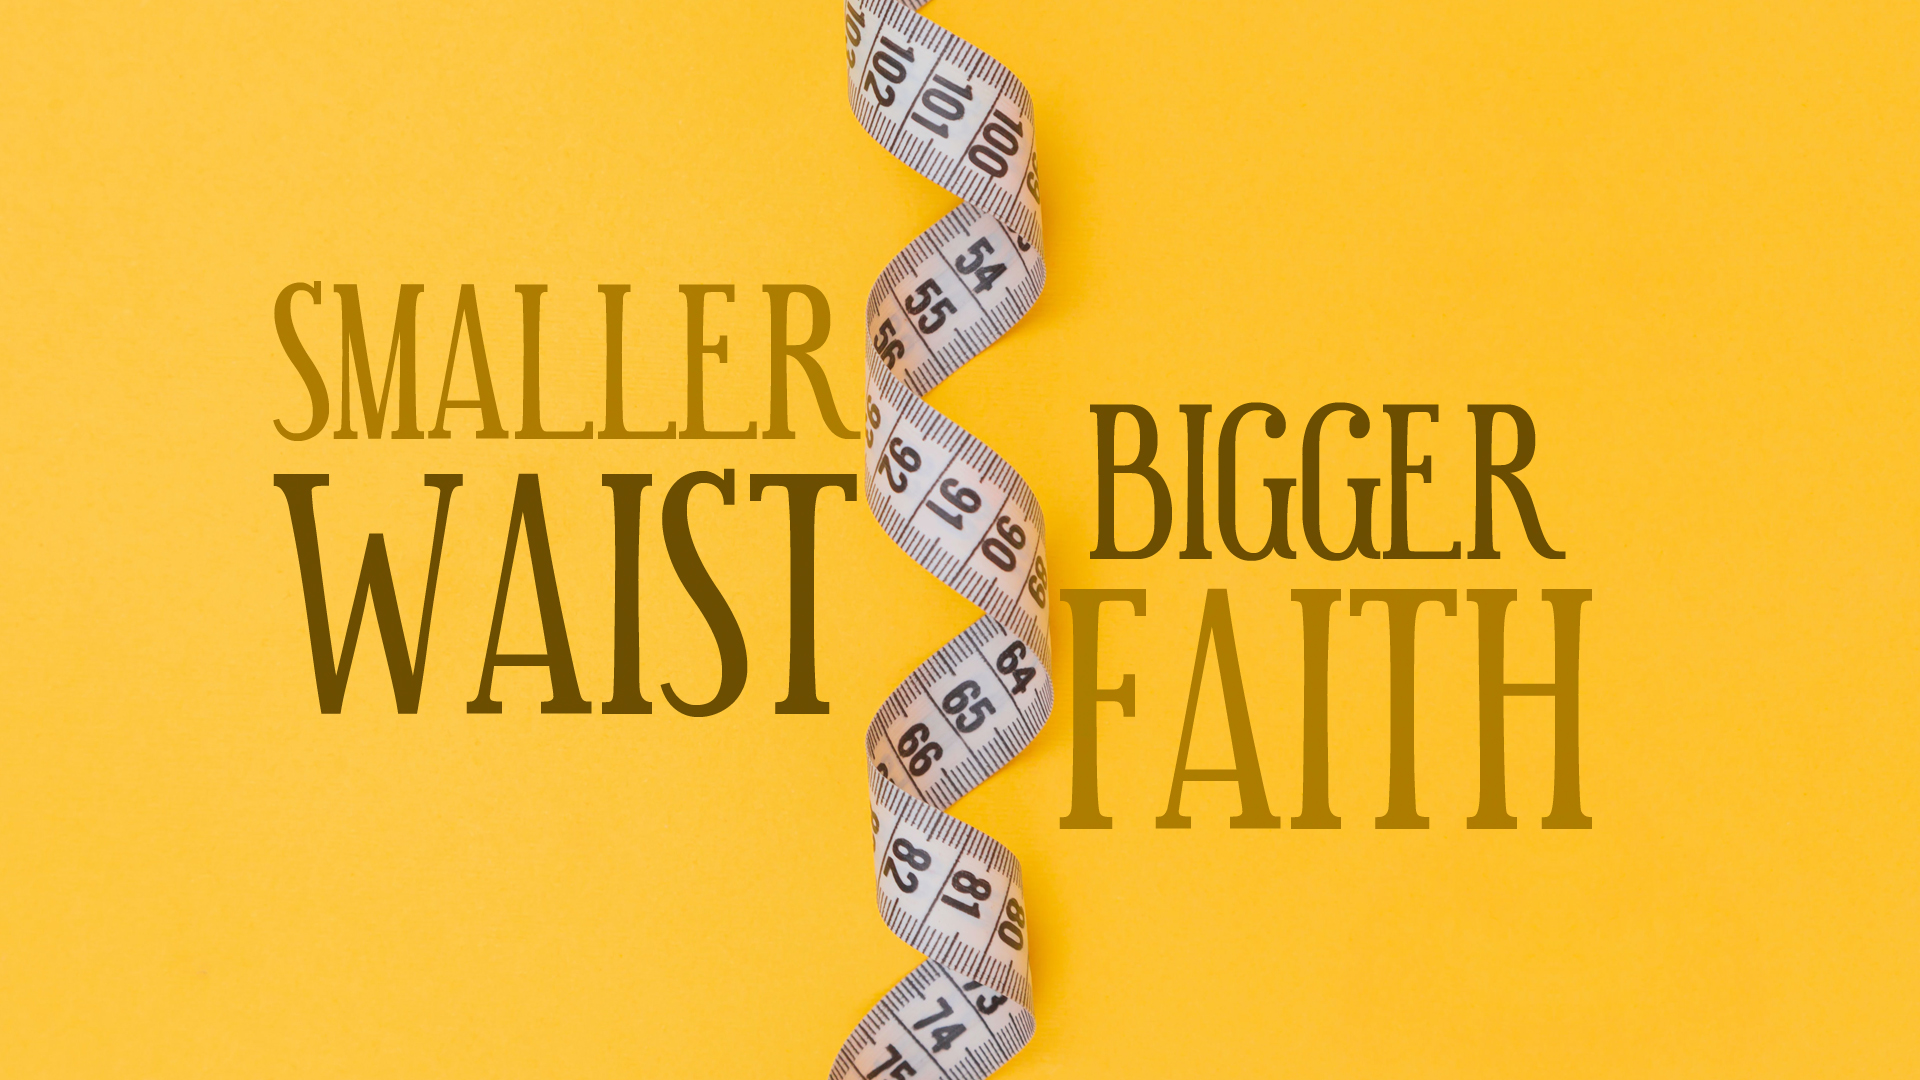 Smaller Waist, Bigger Faith